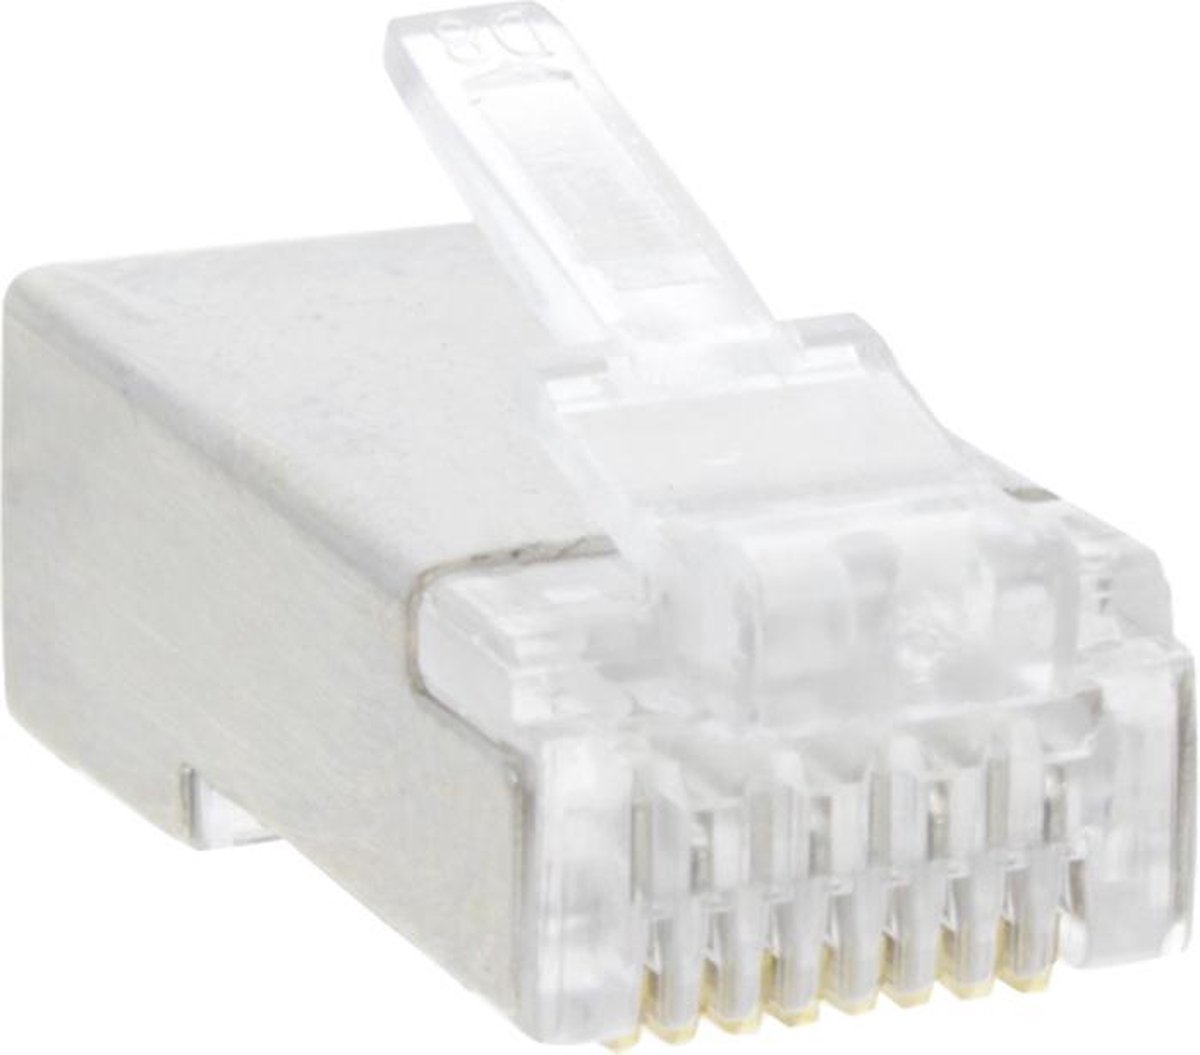 FTP netwerk connector CAT6 8-polig RJ45